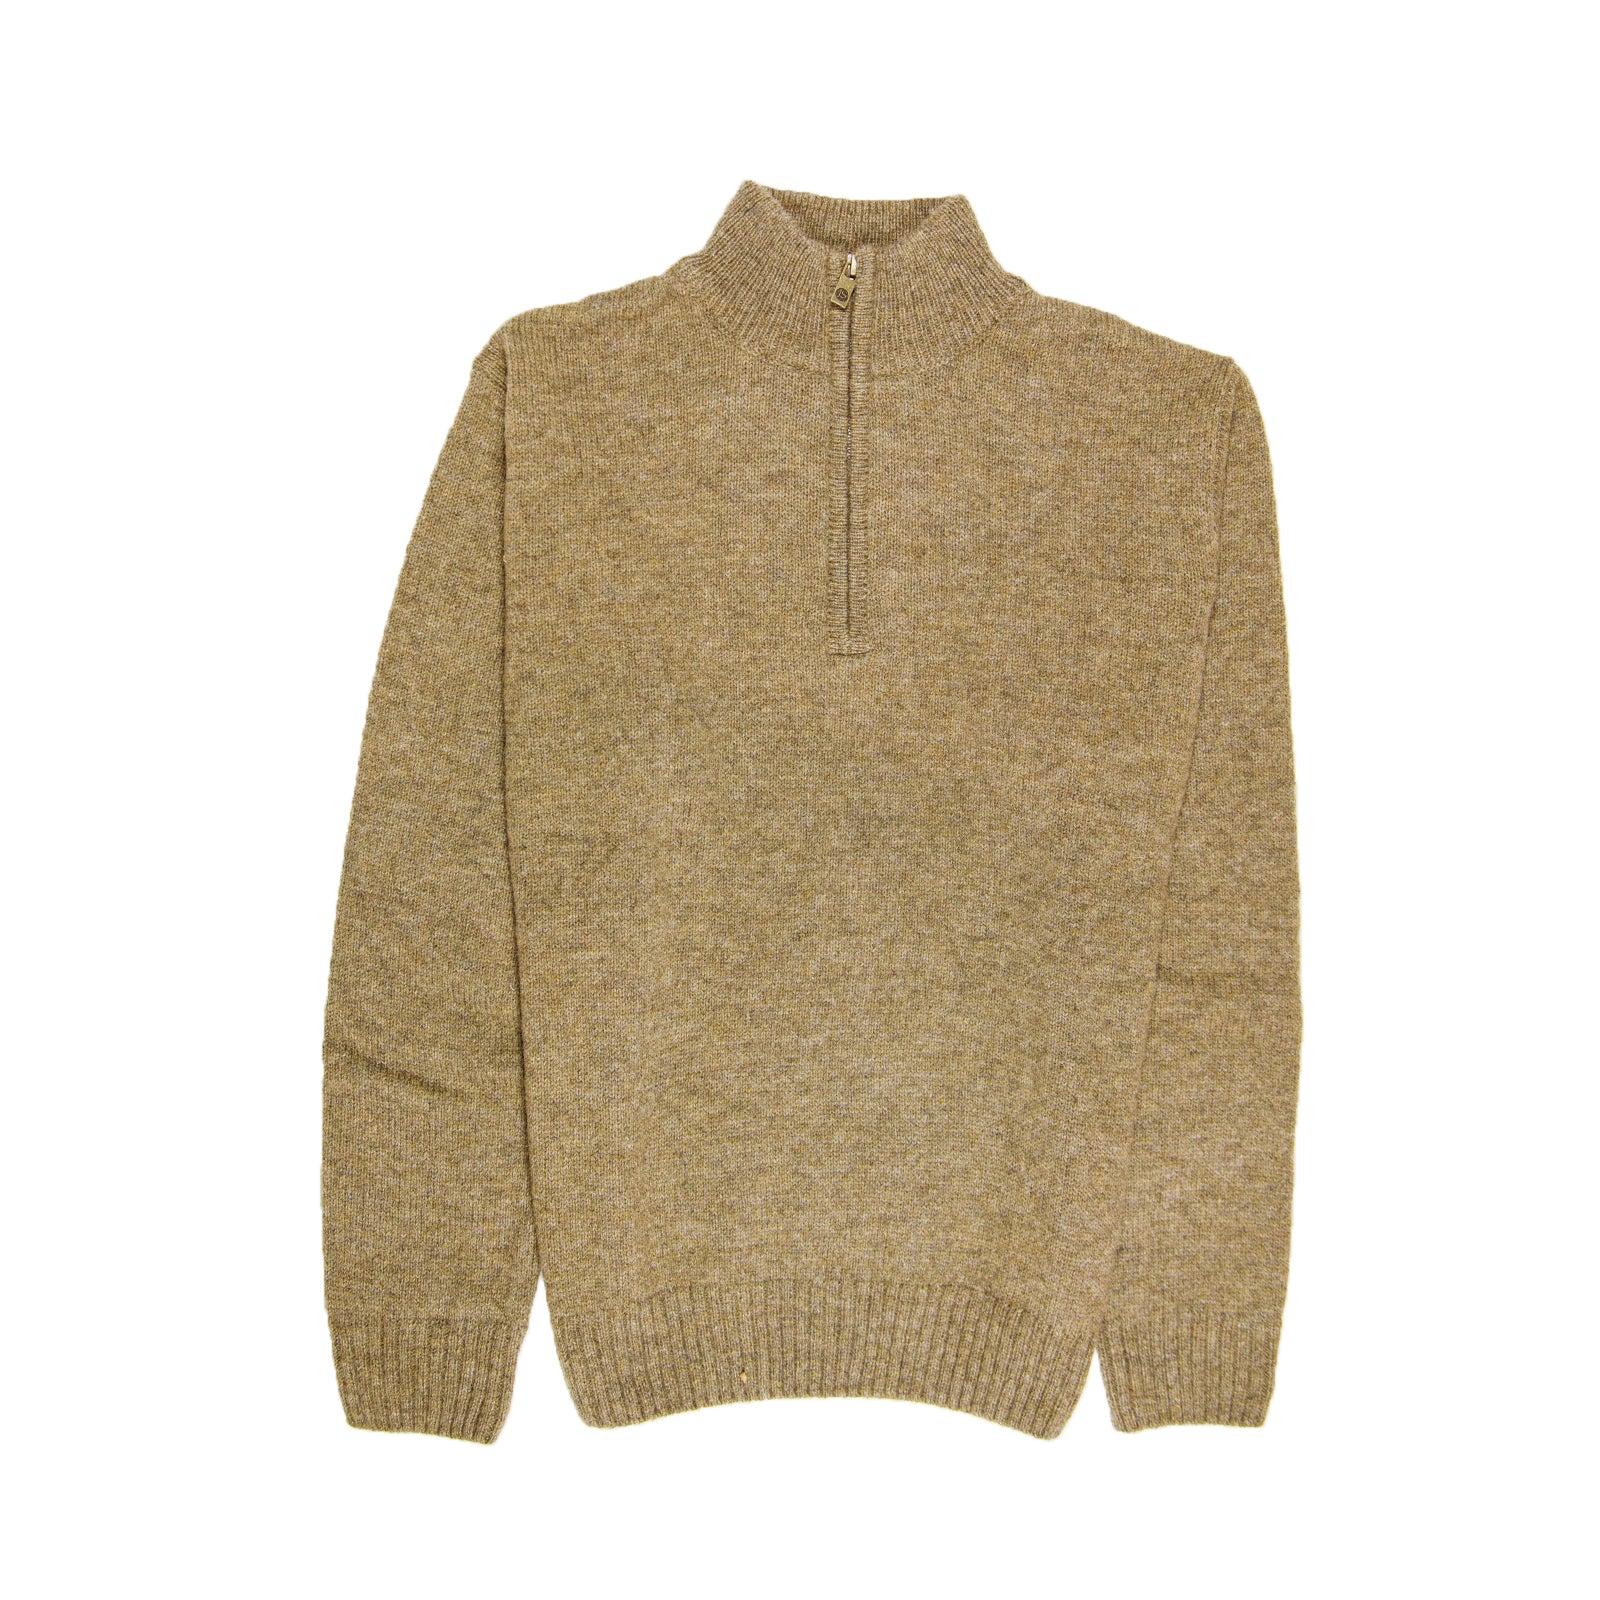 100% SHETLAND WOOL Half Zip Up Knit JUMPER Pullover Mens Sweater Knitted - Nutmeg (23) - S